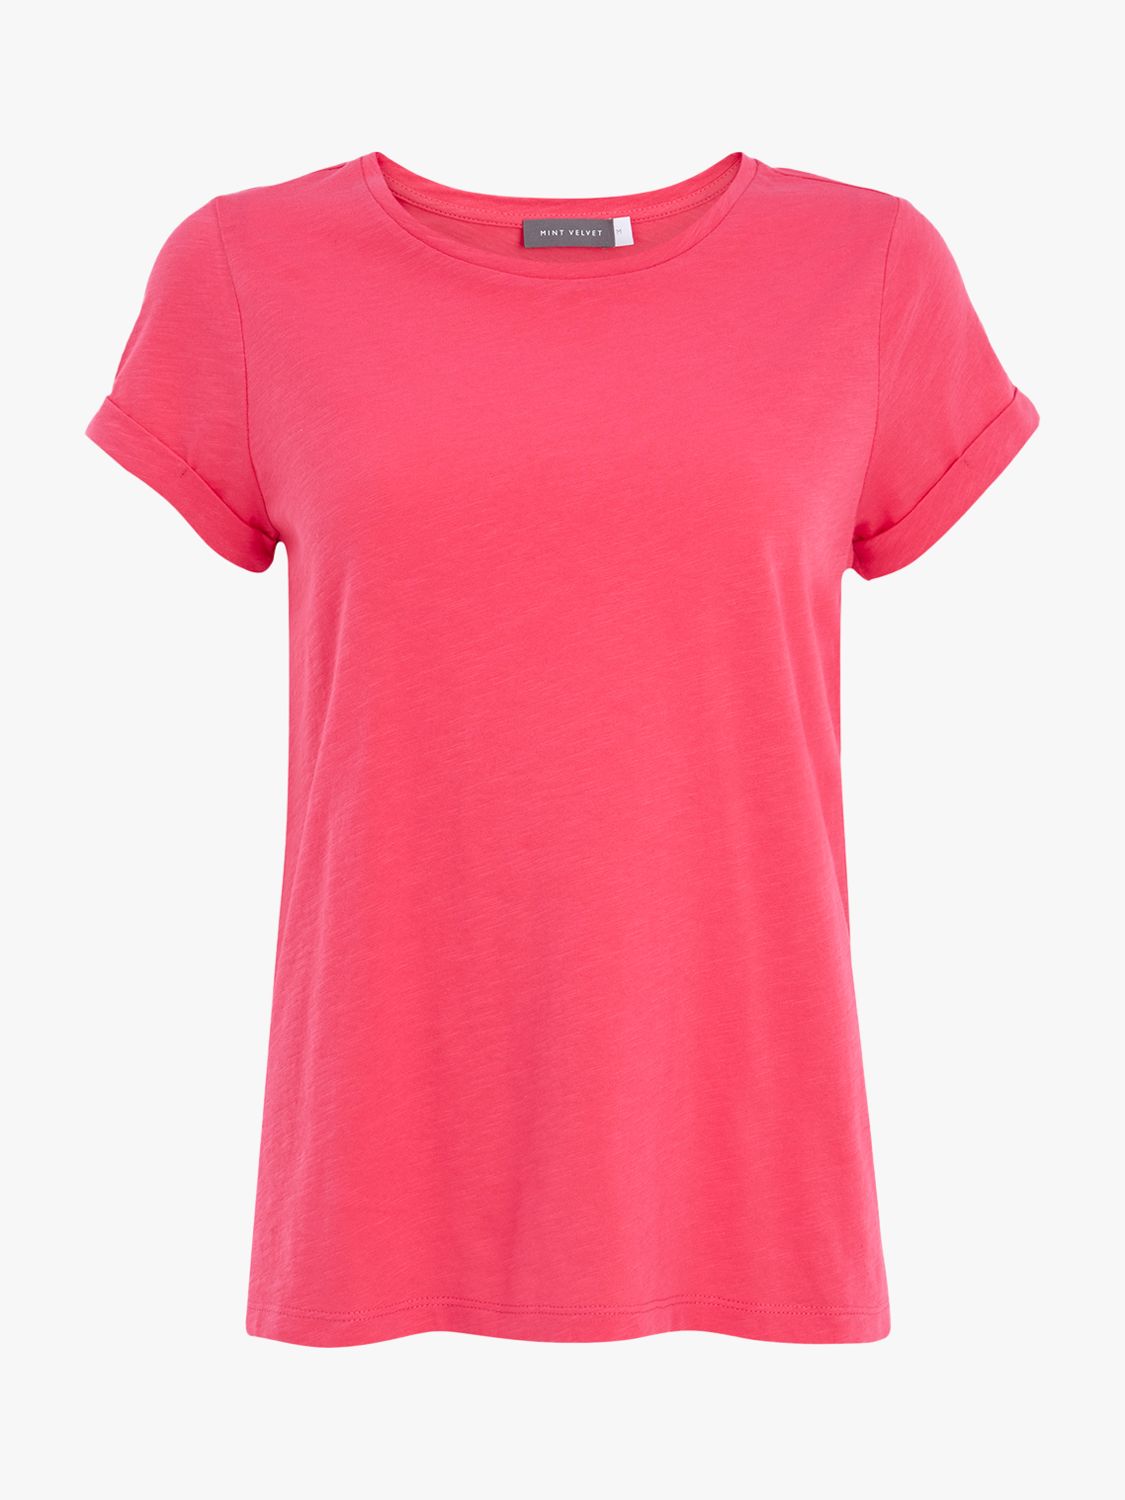 Mint Velvet Star Cotton T-Shirt, Pink at John Lewis & Partners